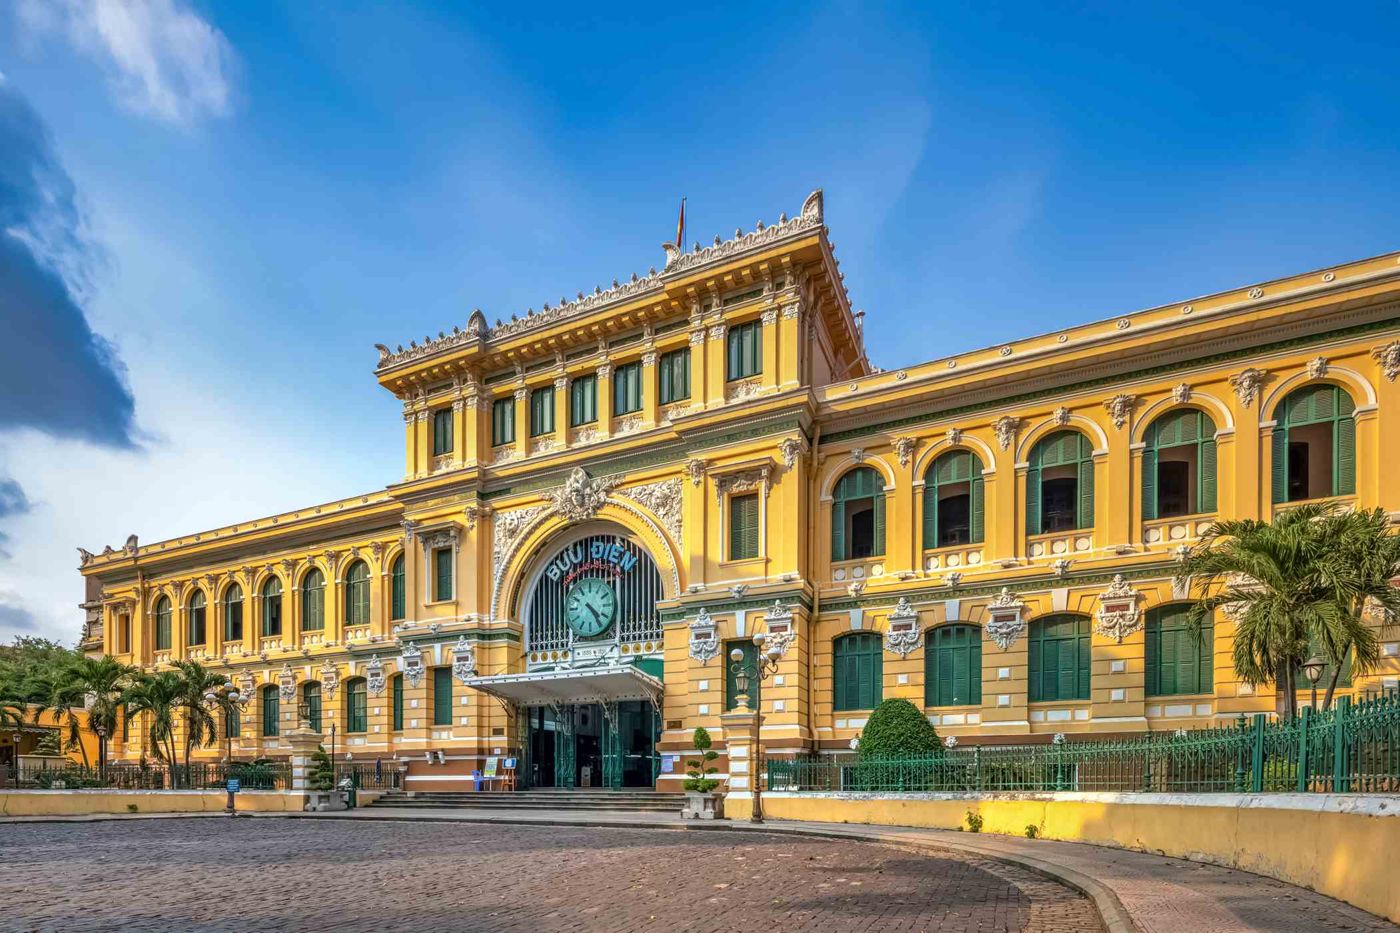 Send a postcard from Saigon Central post Office